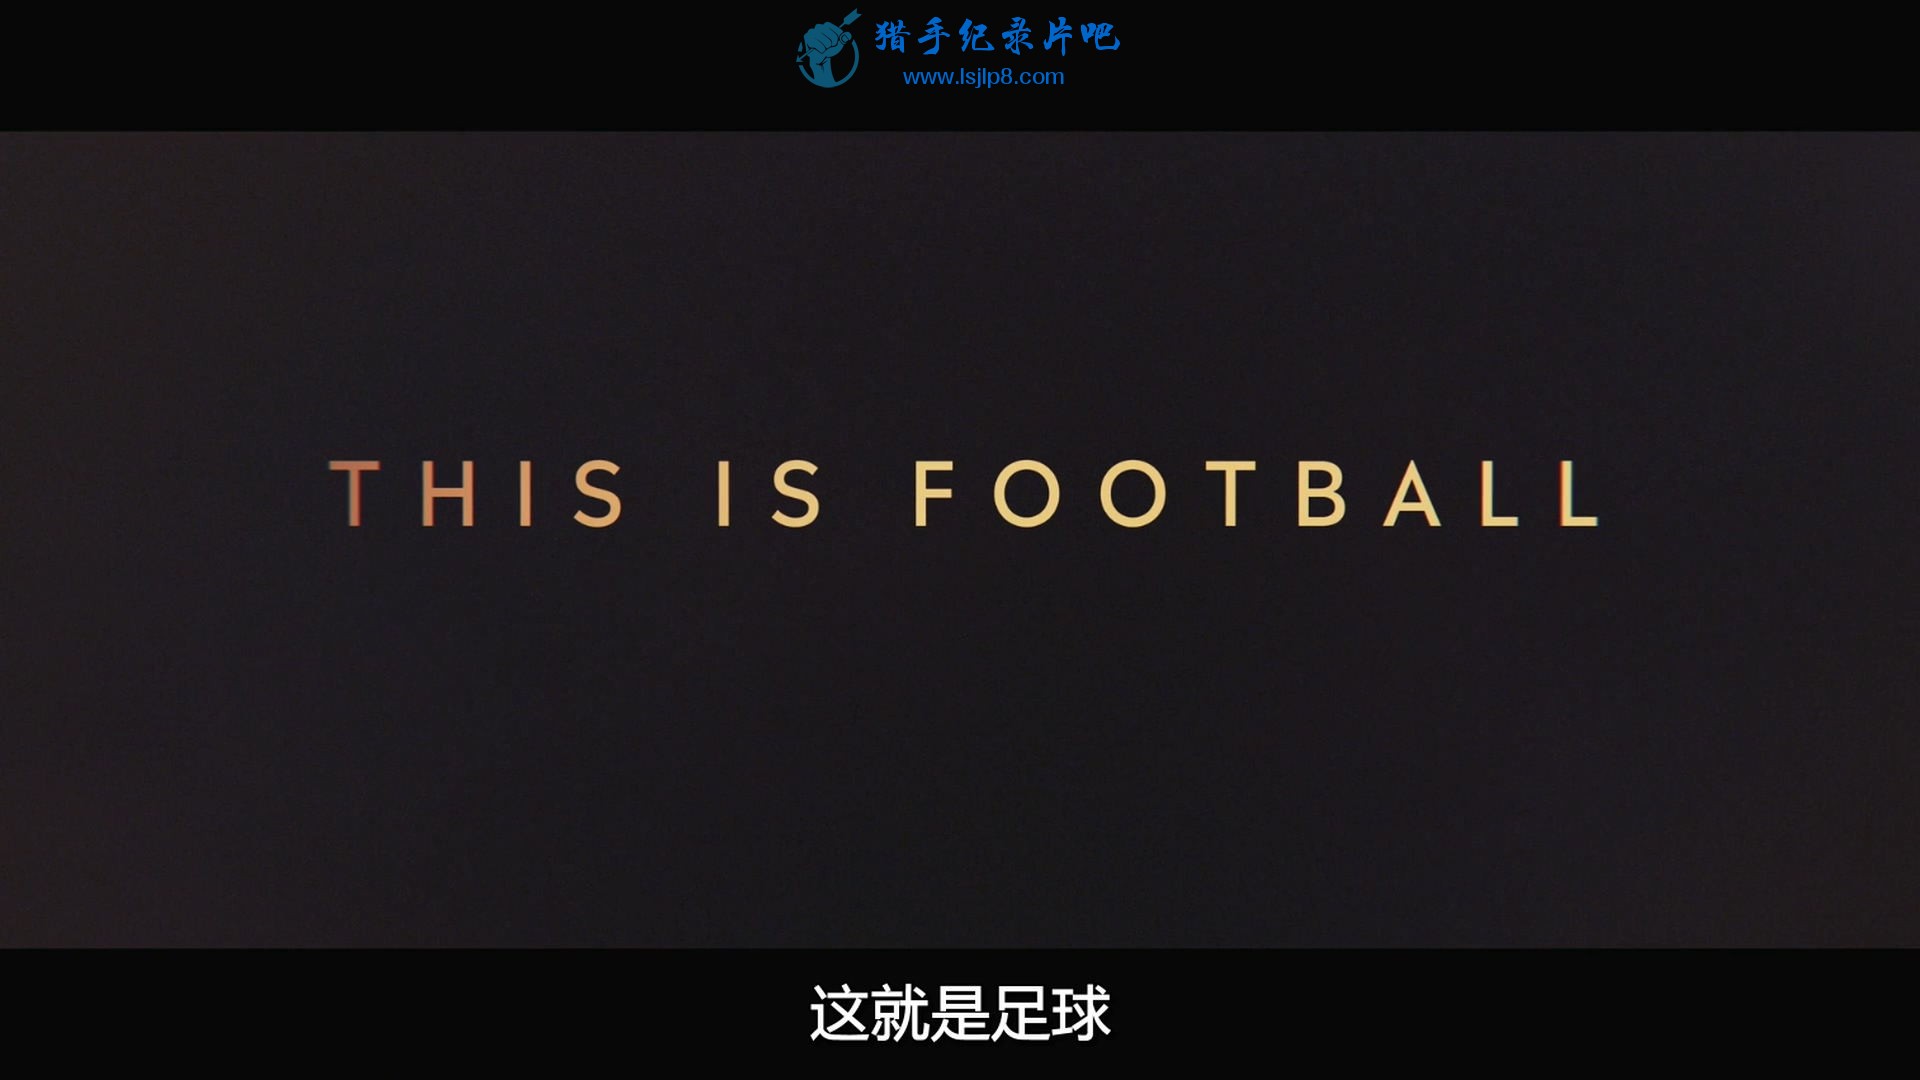 This.is.Football.S01E01.1080p.AMZN.WEB-DL.DDP5.1.H264-Ao.mkv_20200503_083456.300.jpg